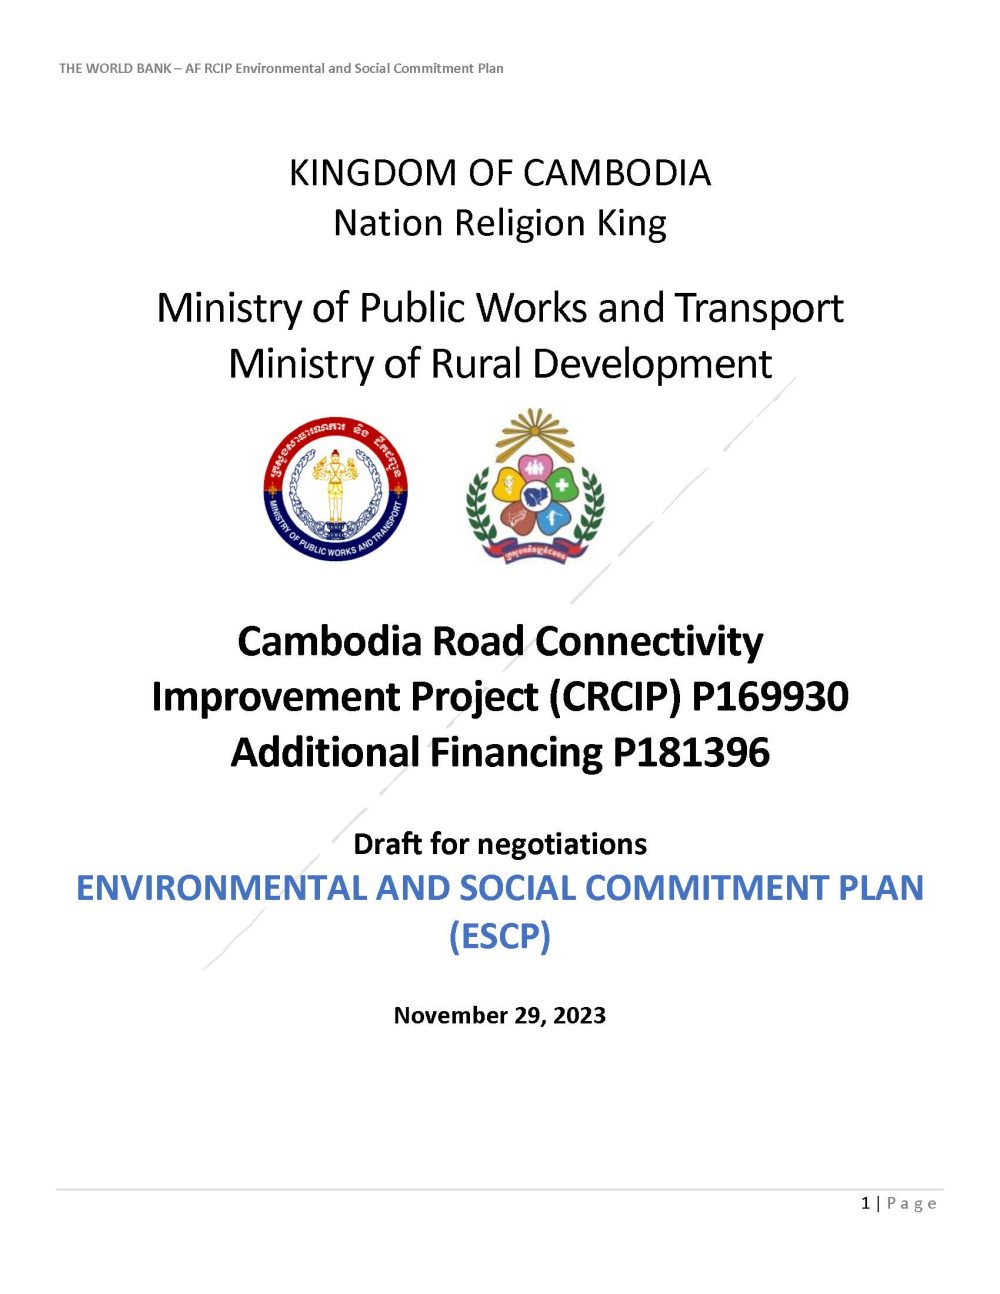 Environmental and Social Commitment Plan ESCP